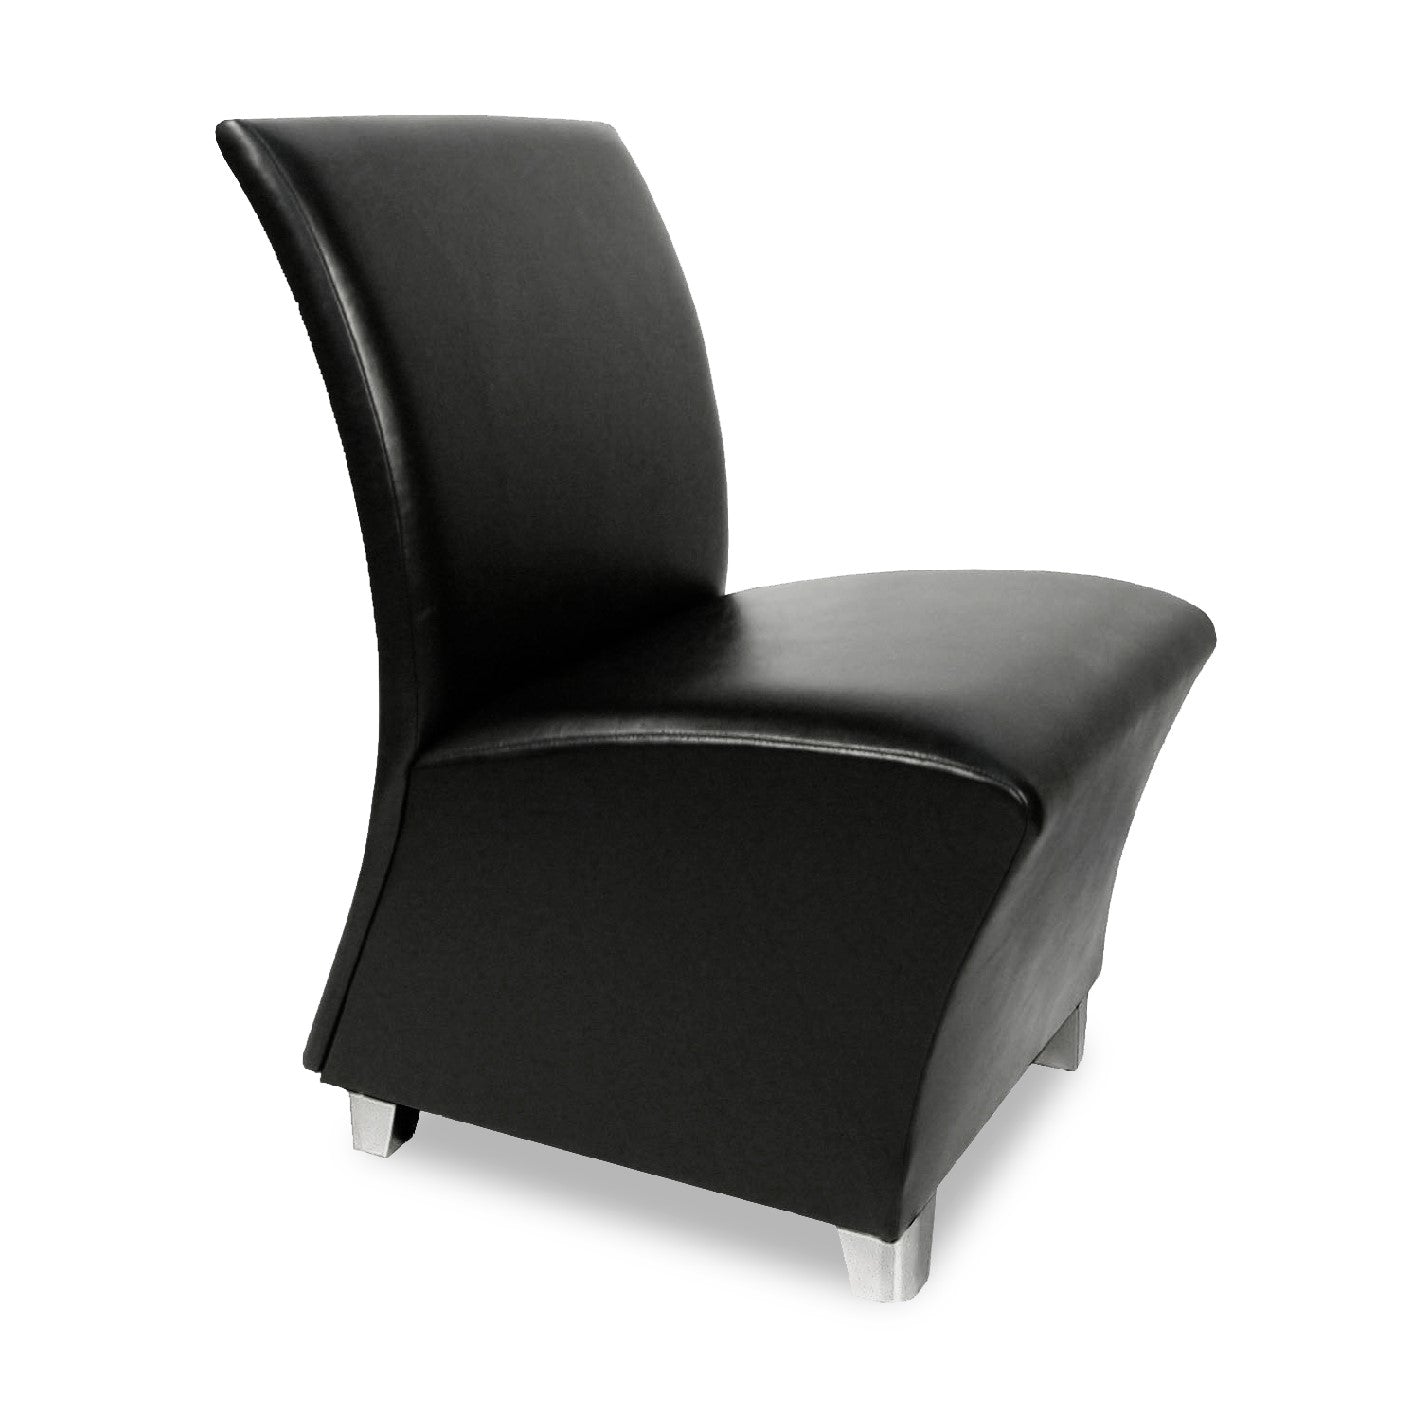 Lanai Reception Chair on Legs - Collins